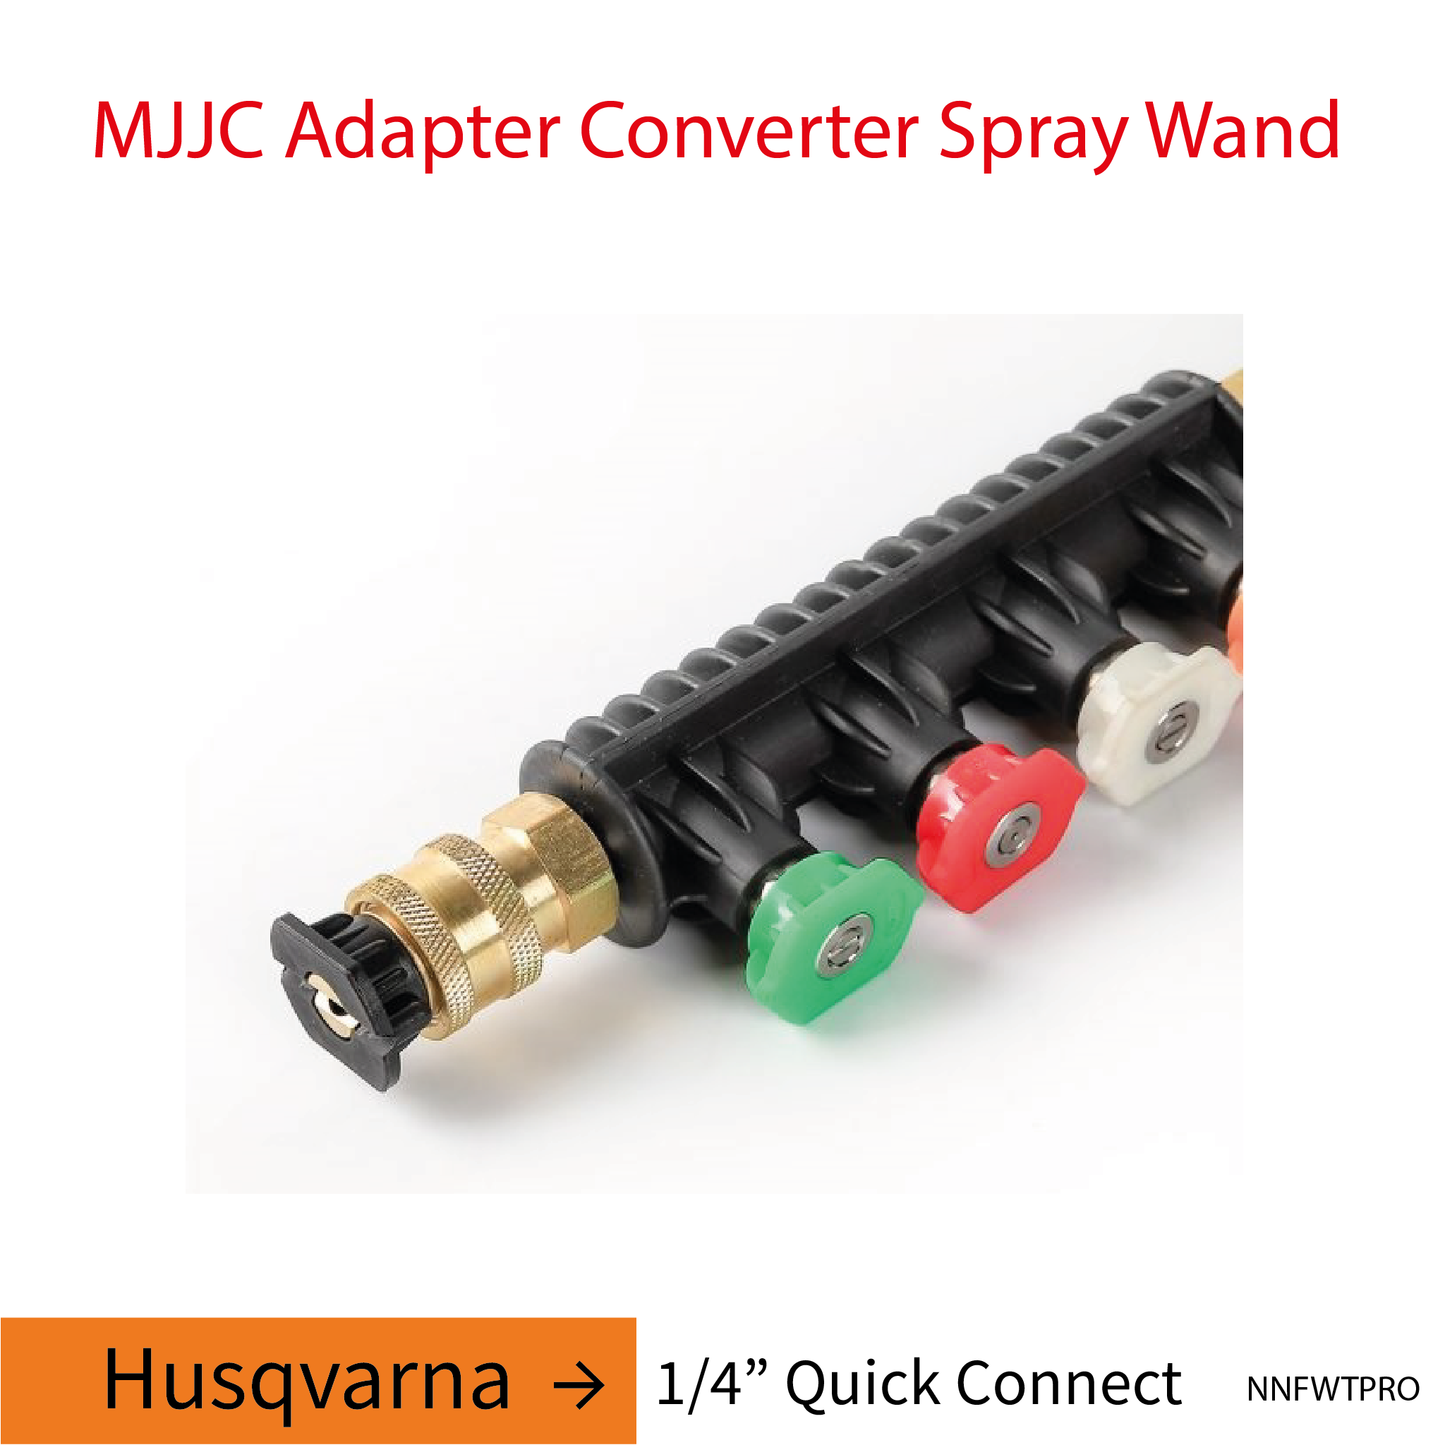 Husqvarna MJJC Adapter Conversion Converter pressure washer Spray Wand with 5 spray tips